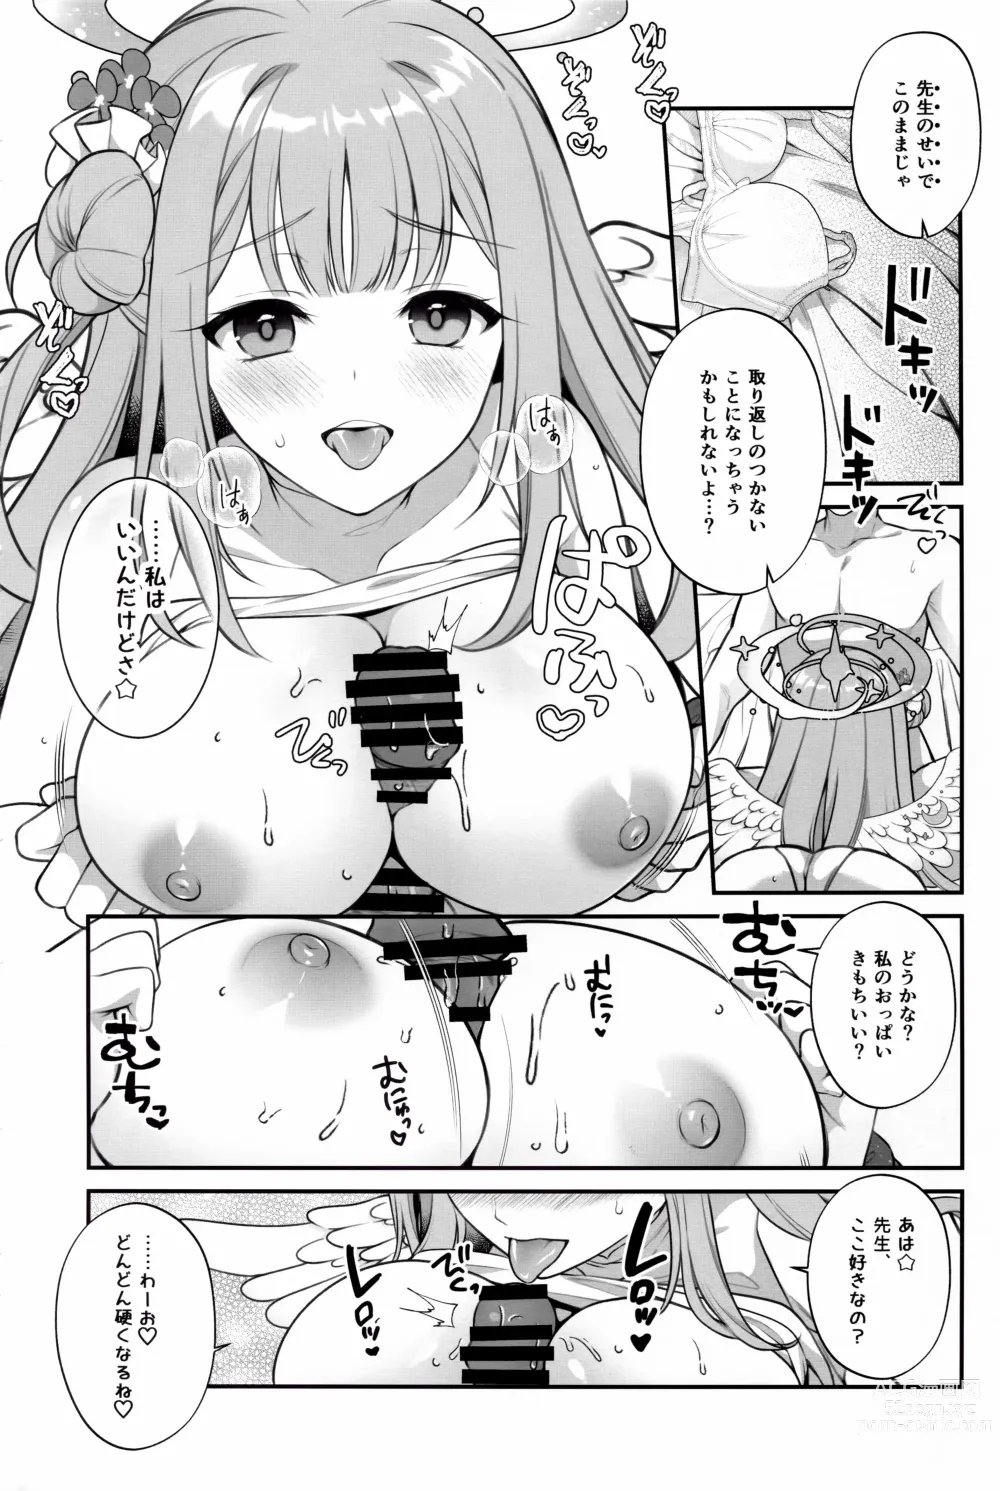 Page 7 of doujinshi Mika to Himitsu no Teatime